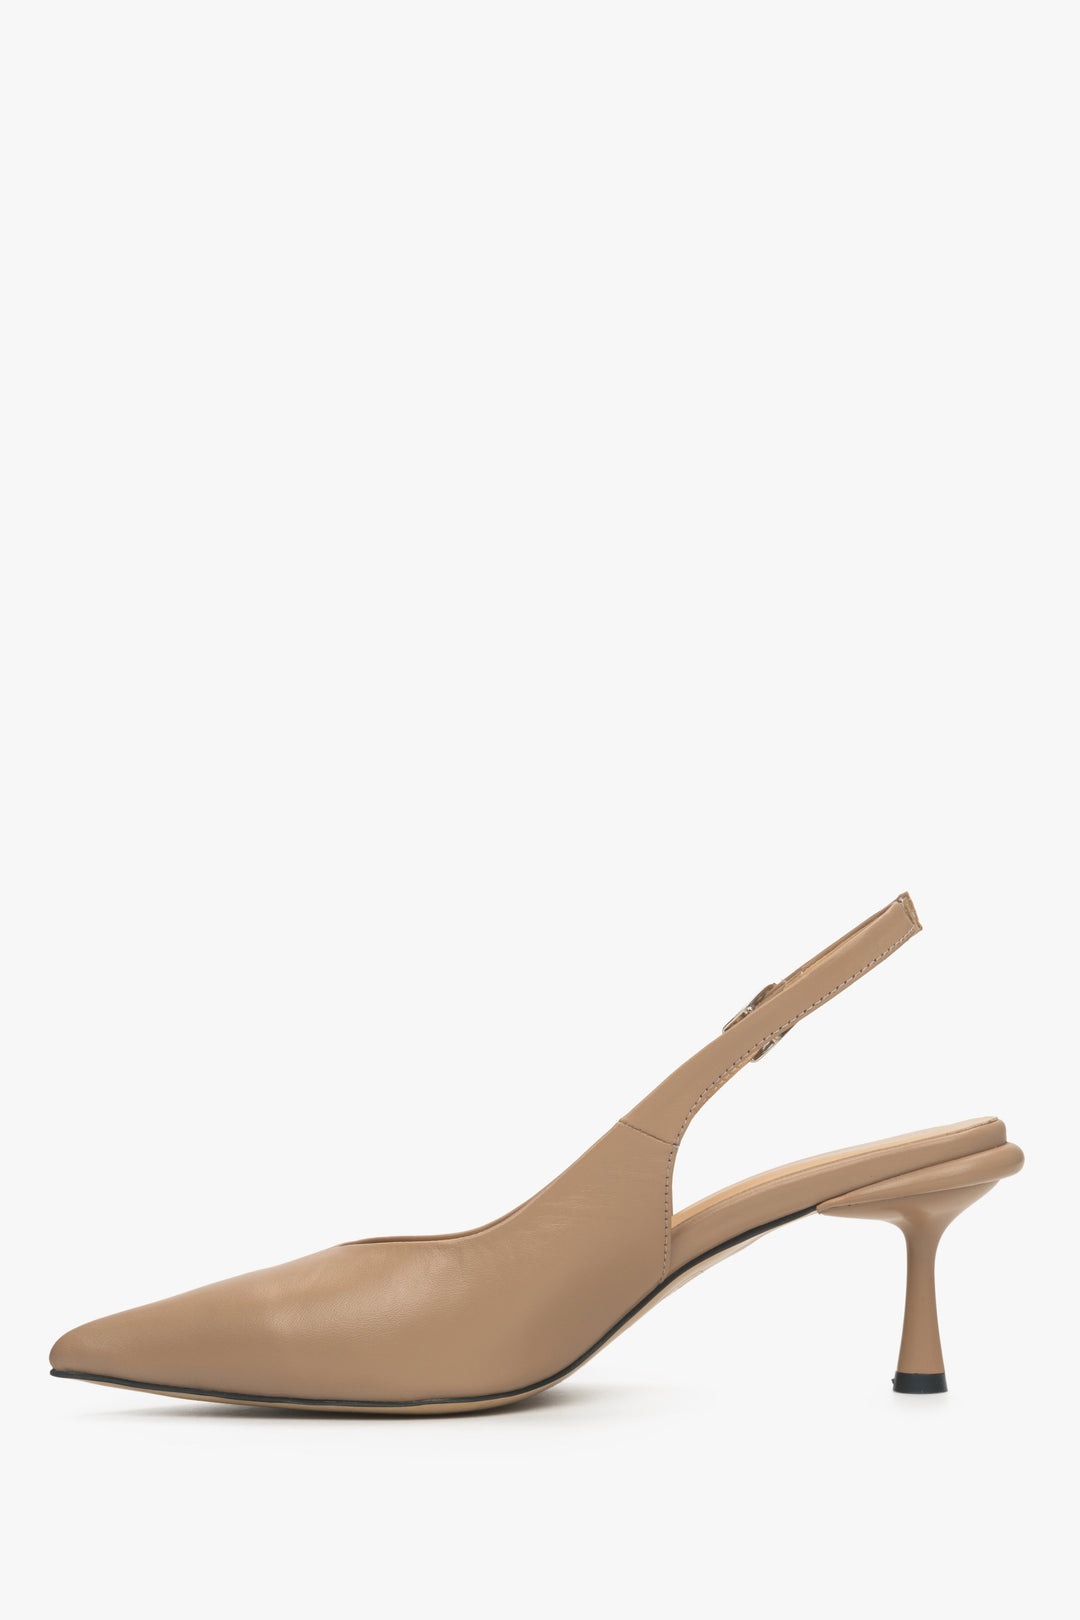 Skórzane beżowe buty damskie typu slingback Estro - profil buta.